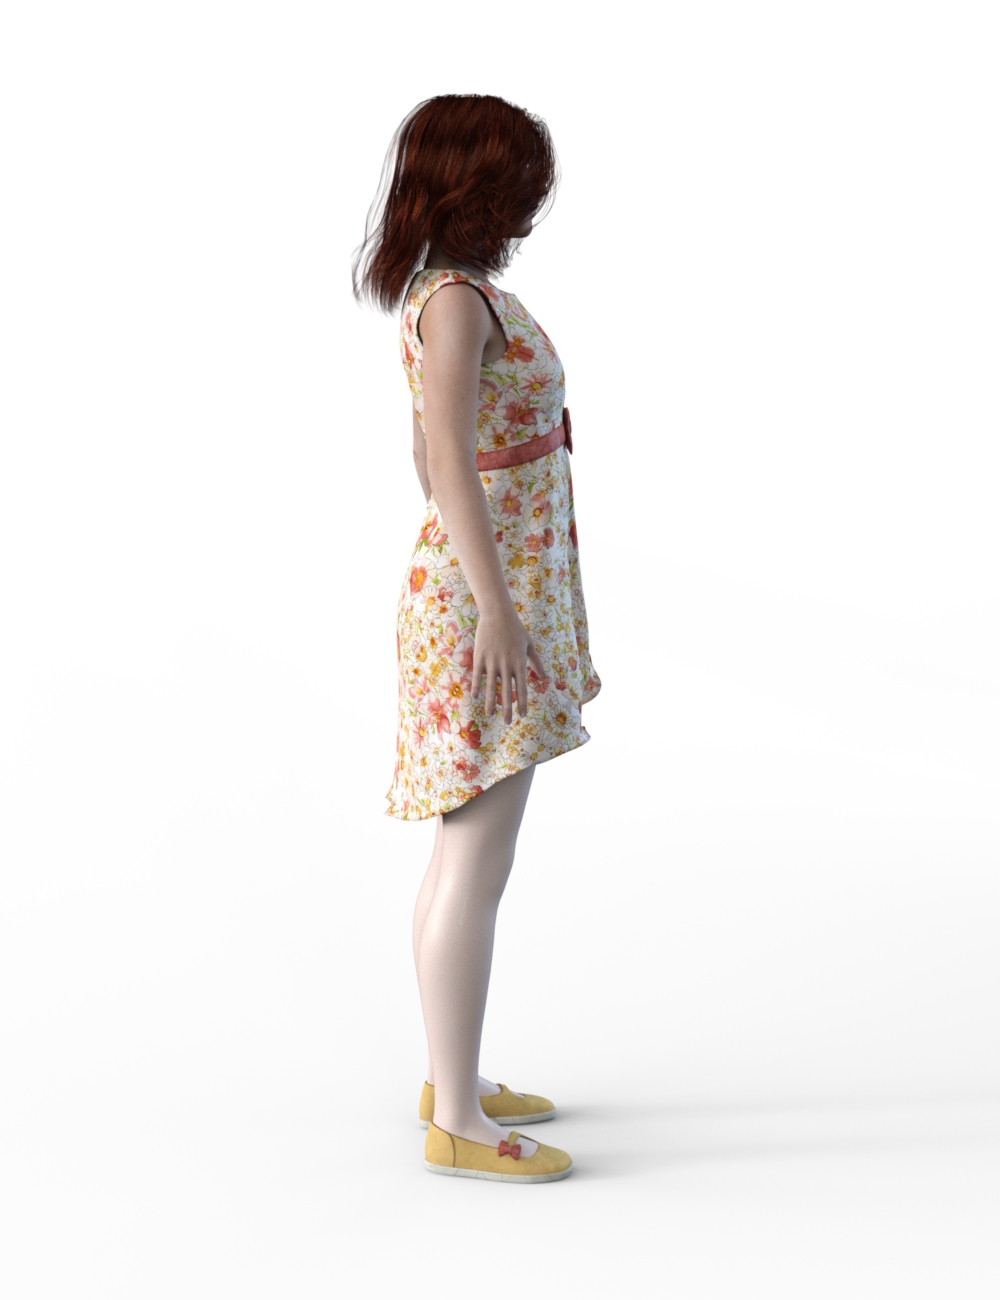 FBX- Base Female Sunday Morning Outfit by: Paleo, 3D Models by Daz 3D